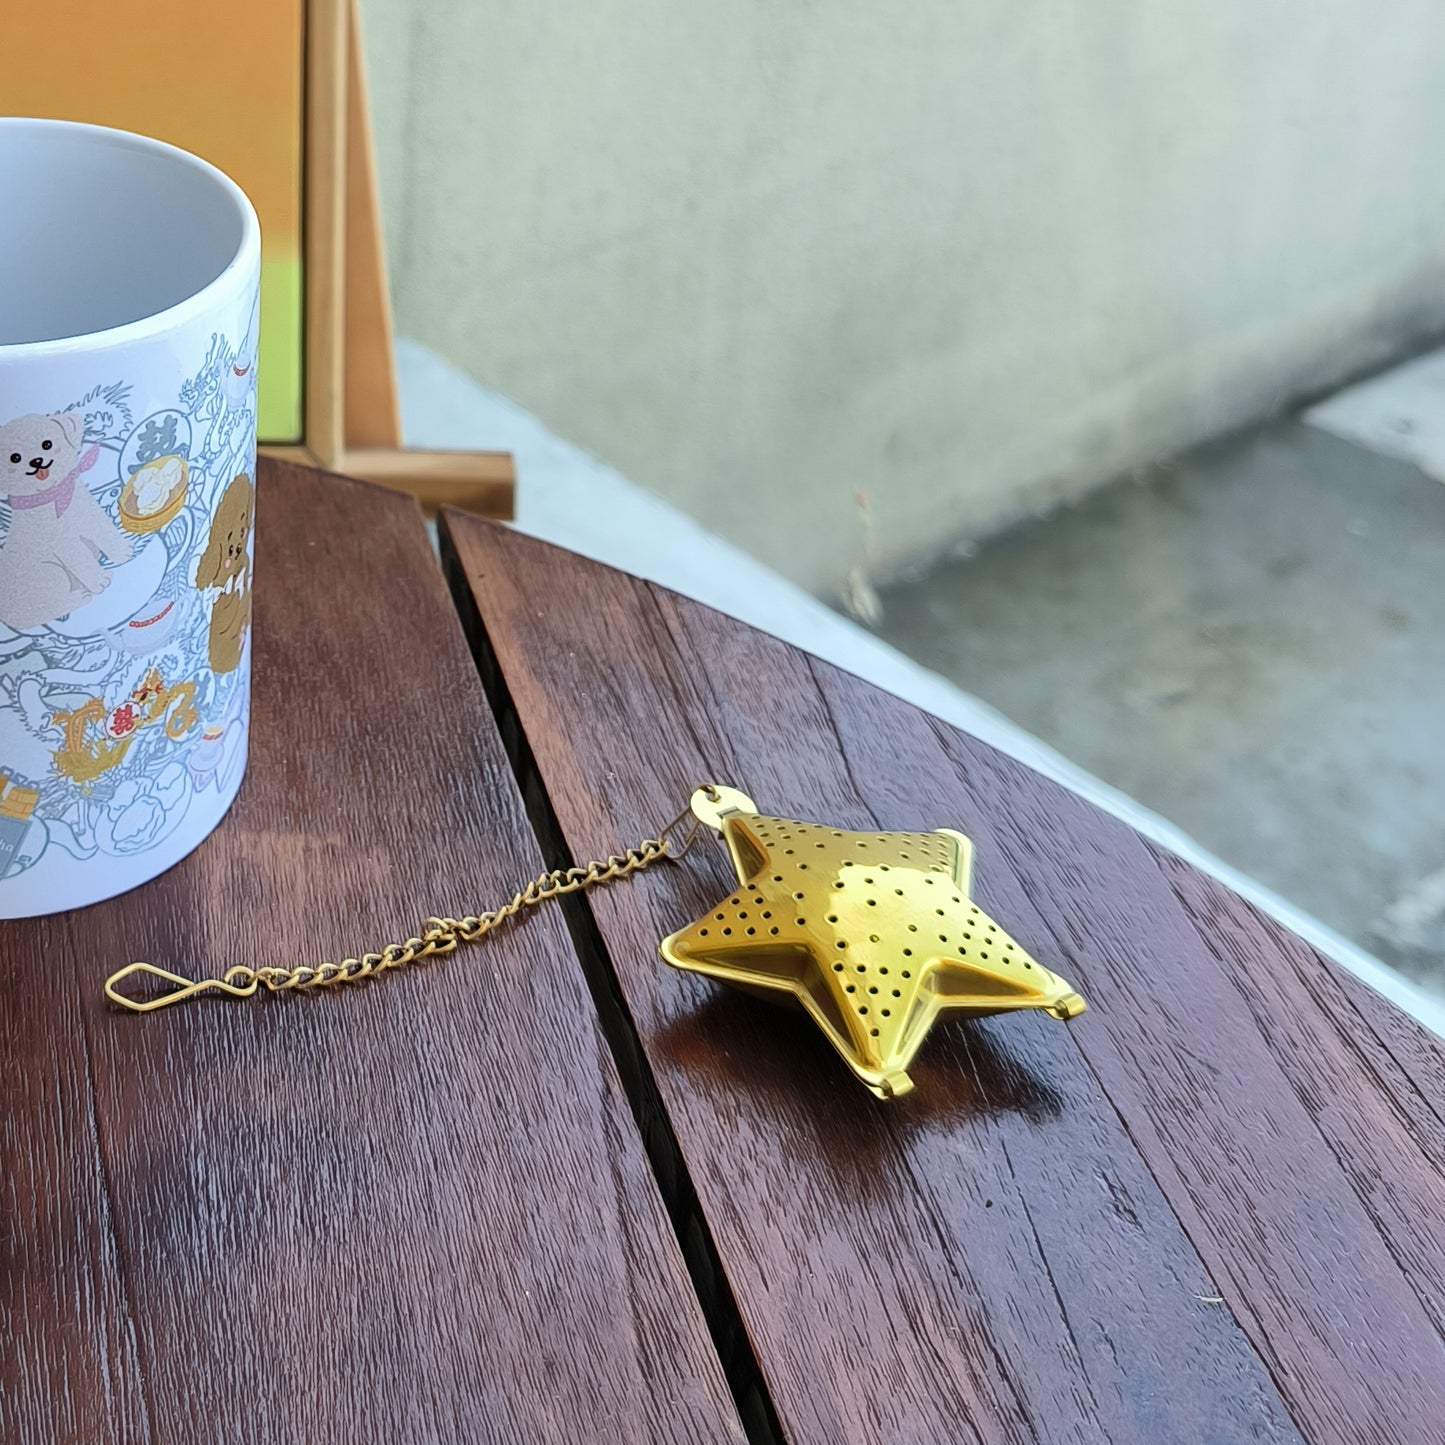 "Let's Yum Cha" Mug, Tea Infuser and Coaster Set